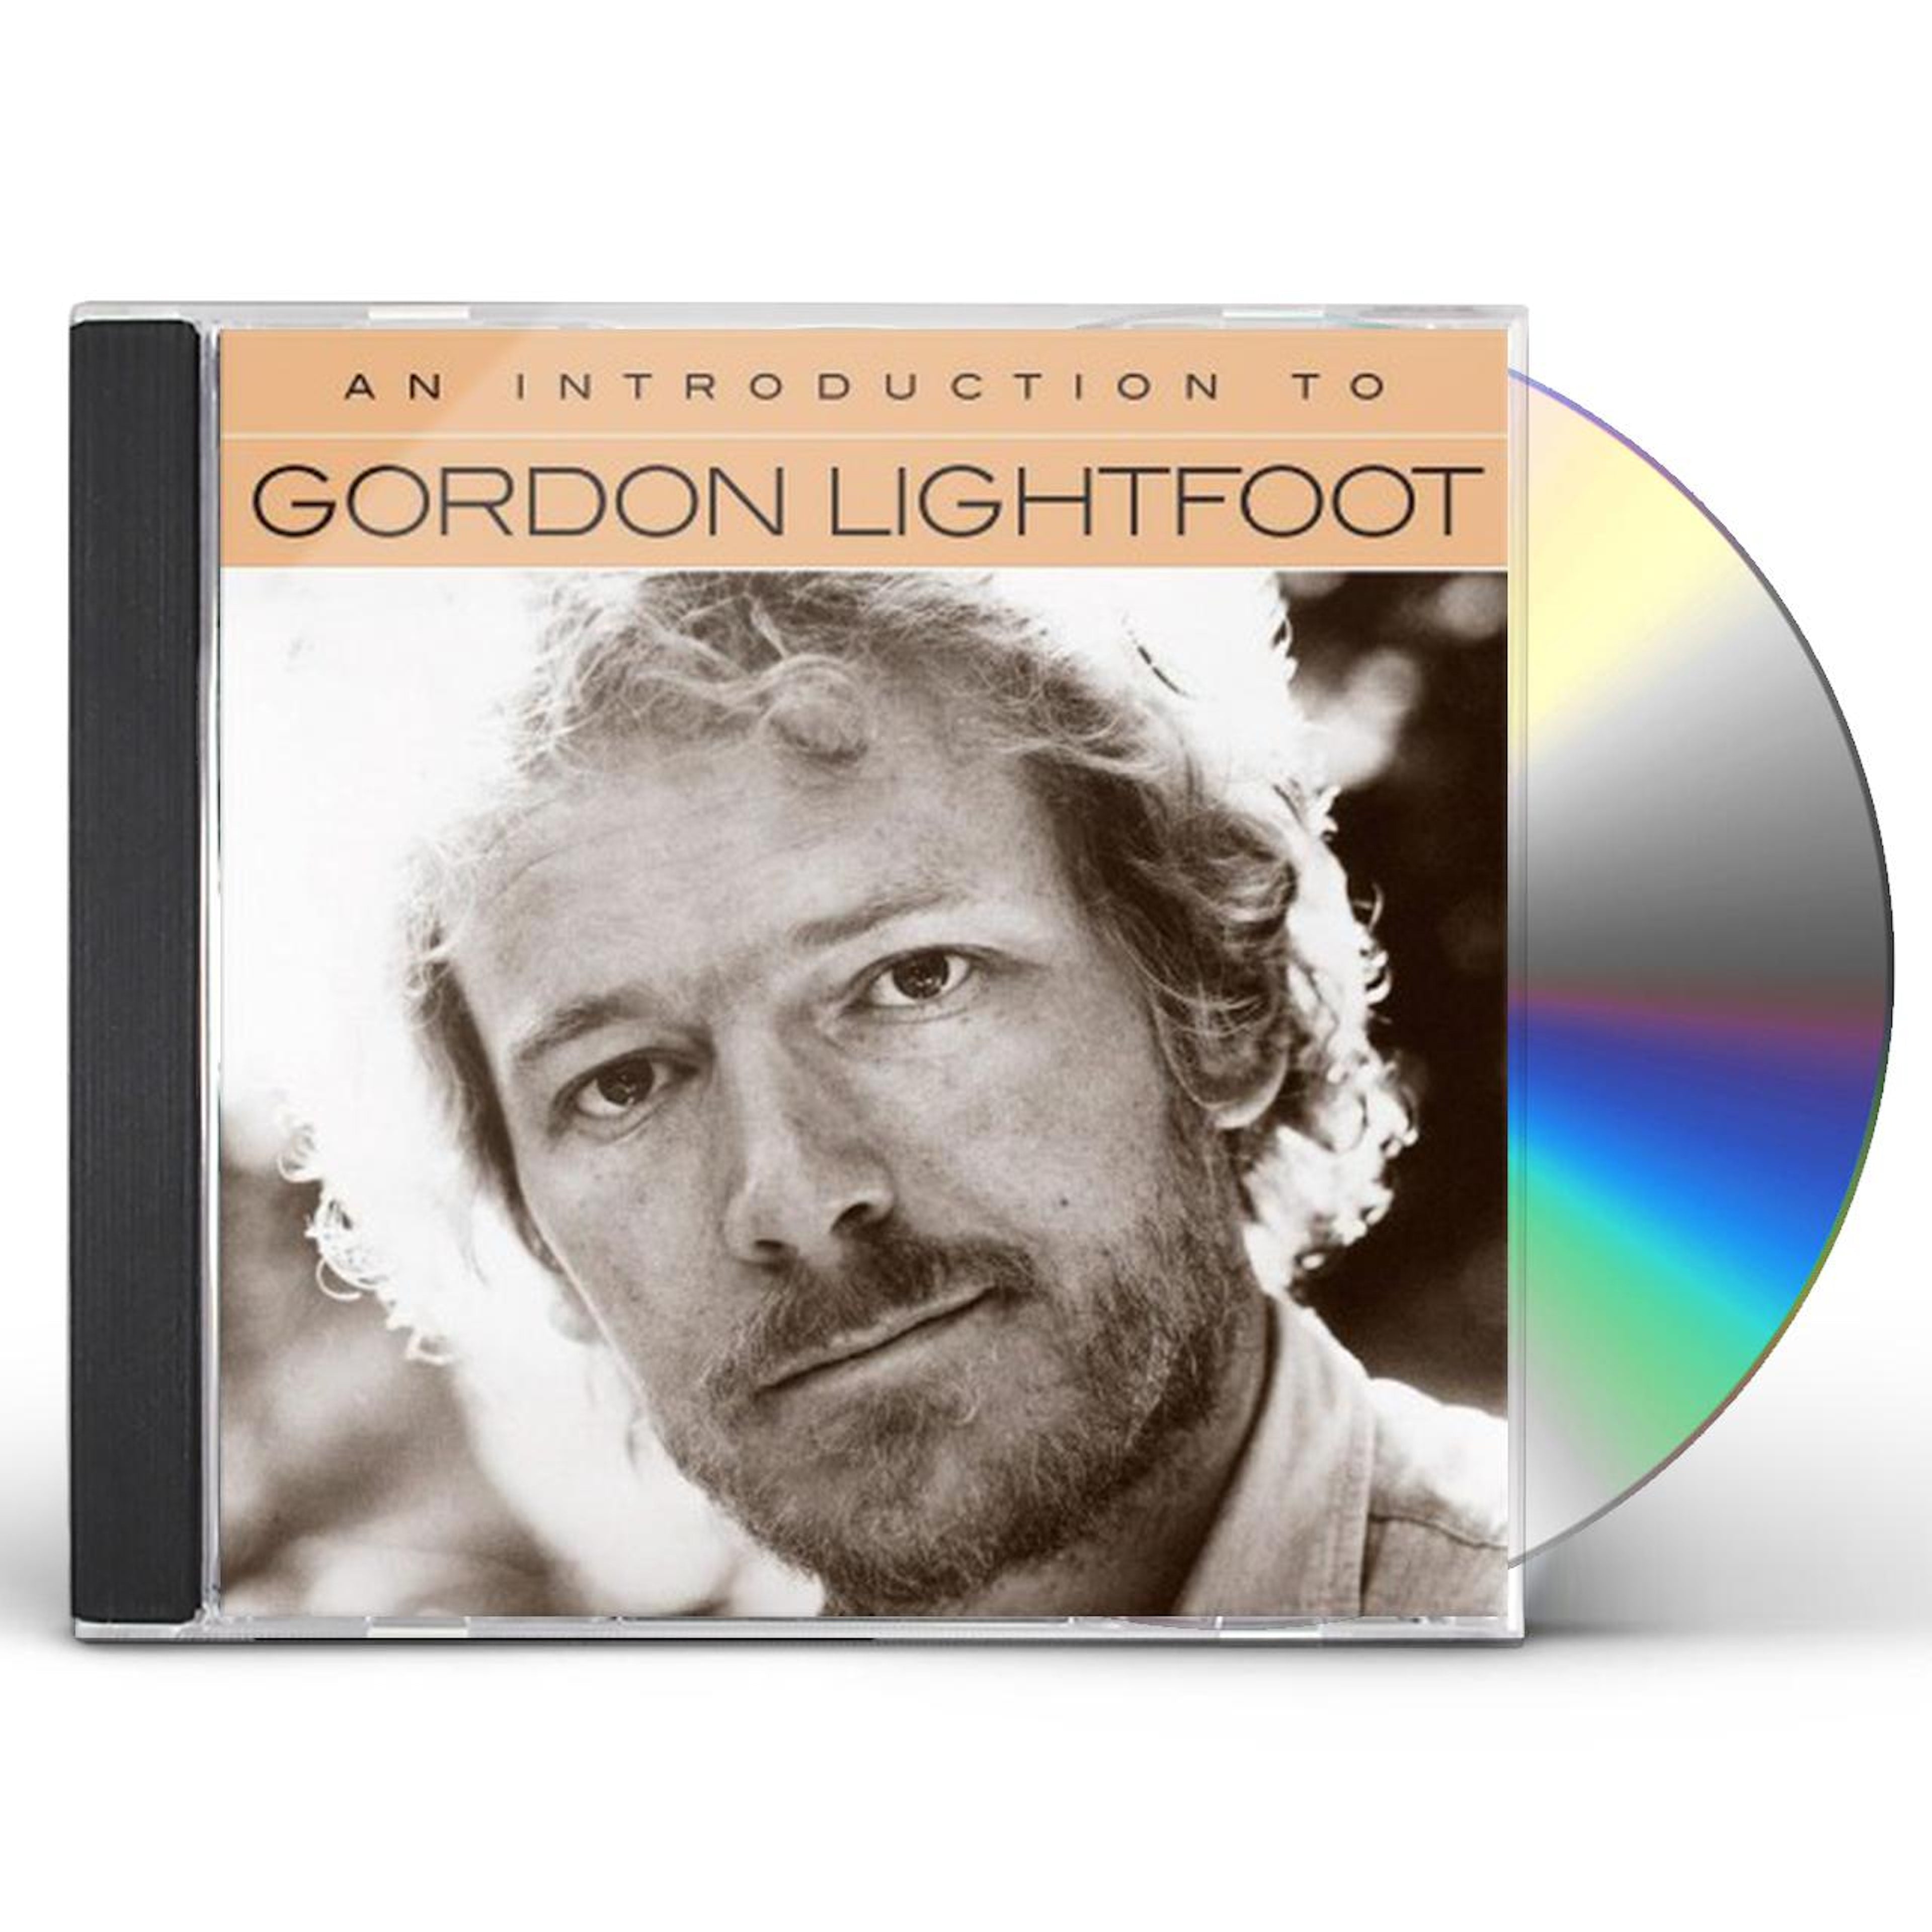 Gordon Lightfoot – An Introduction To CD